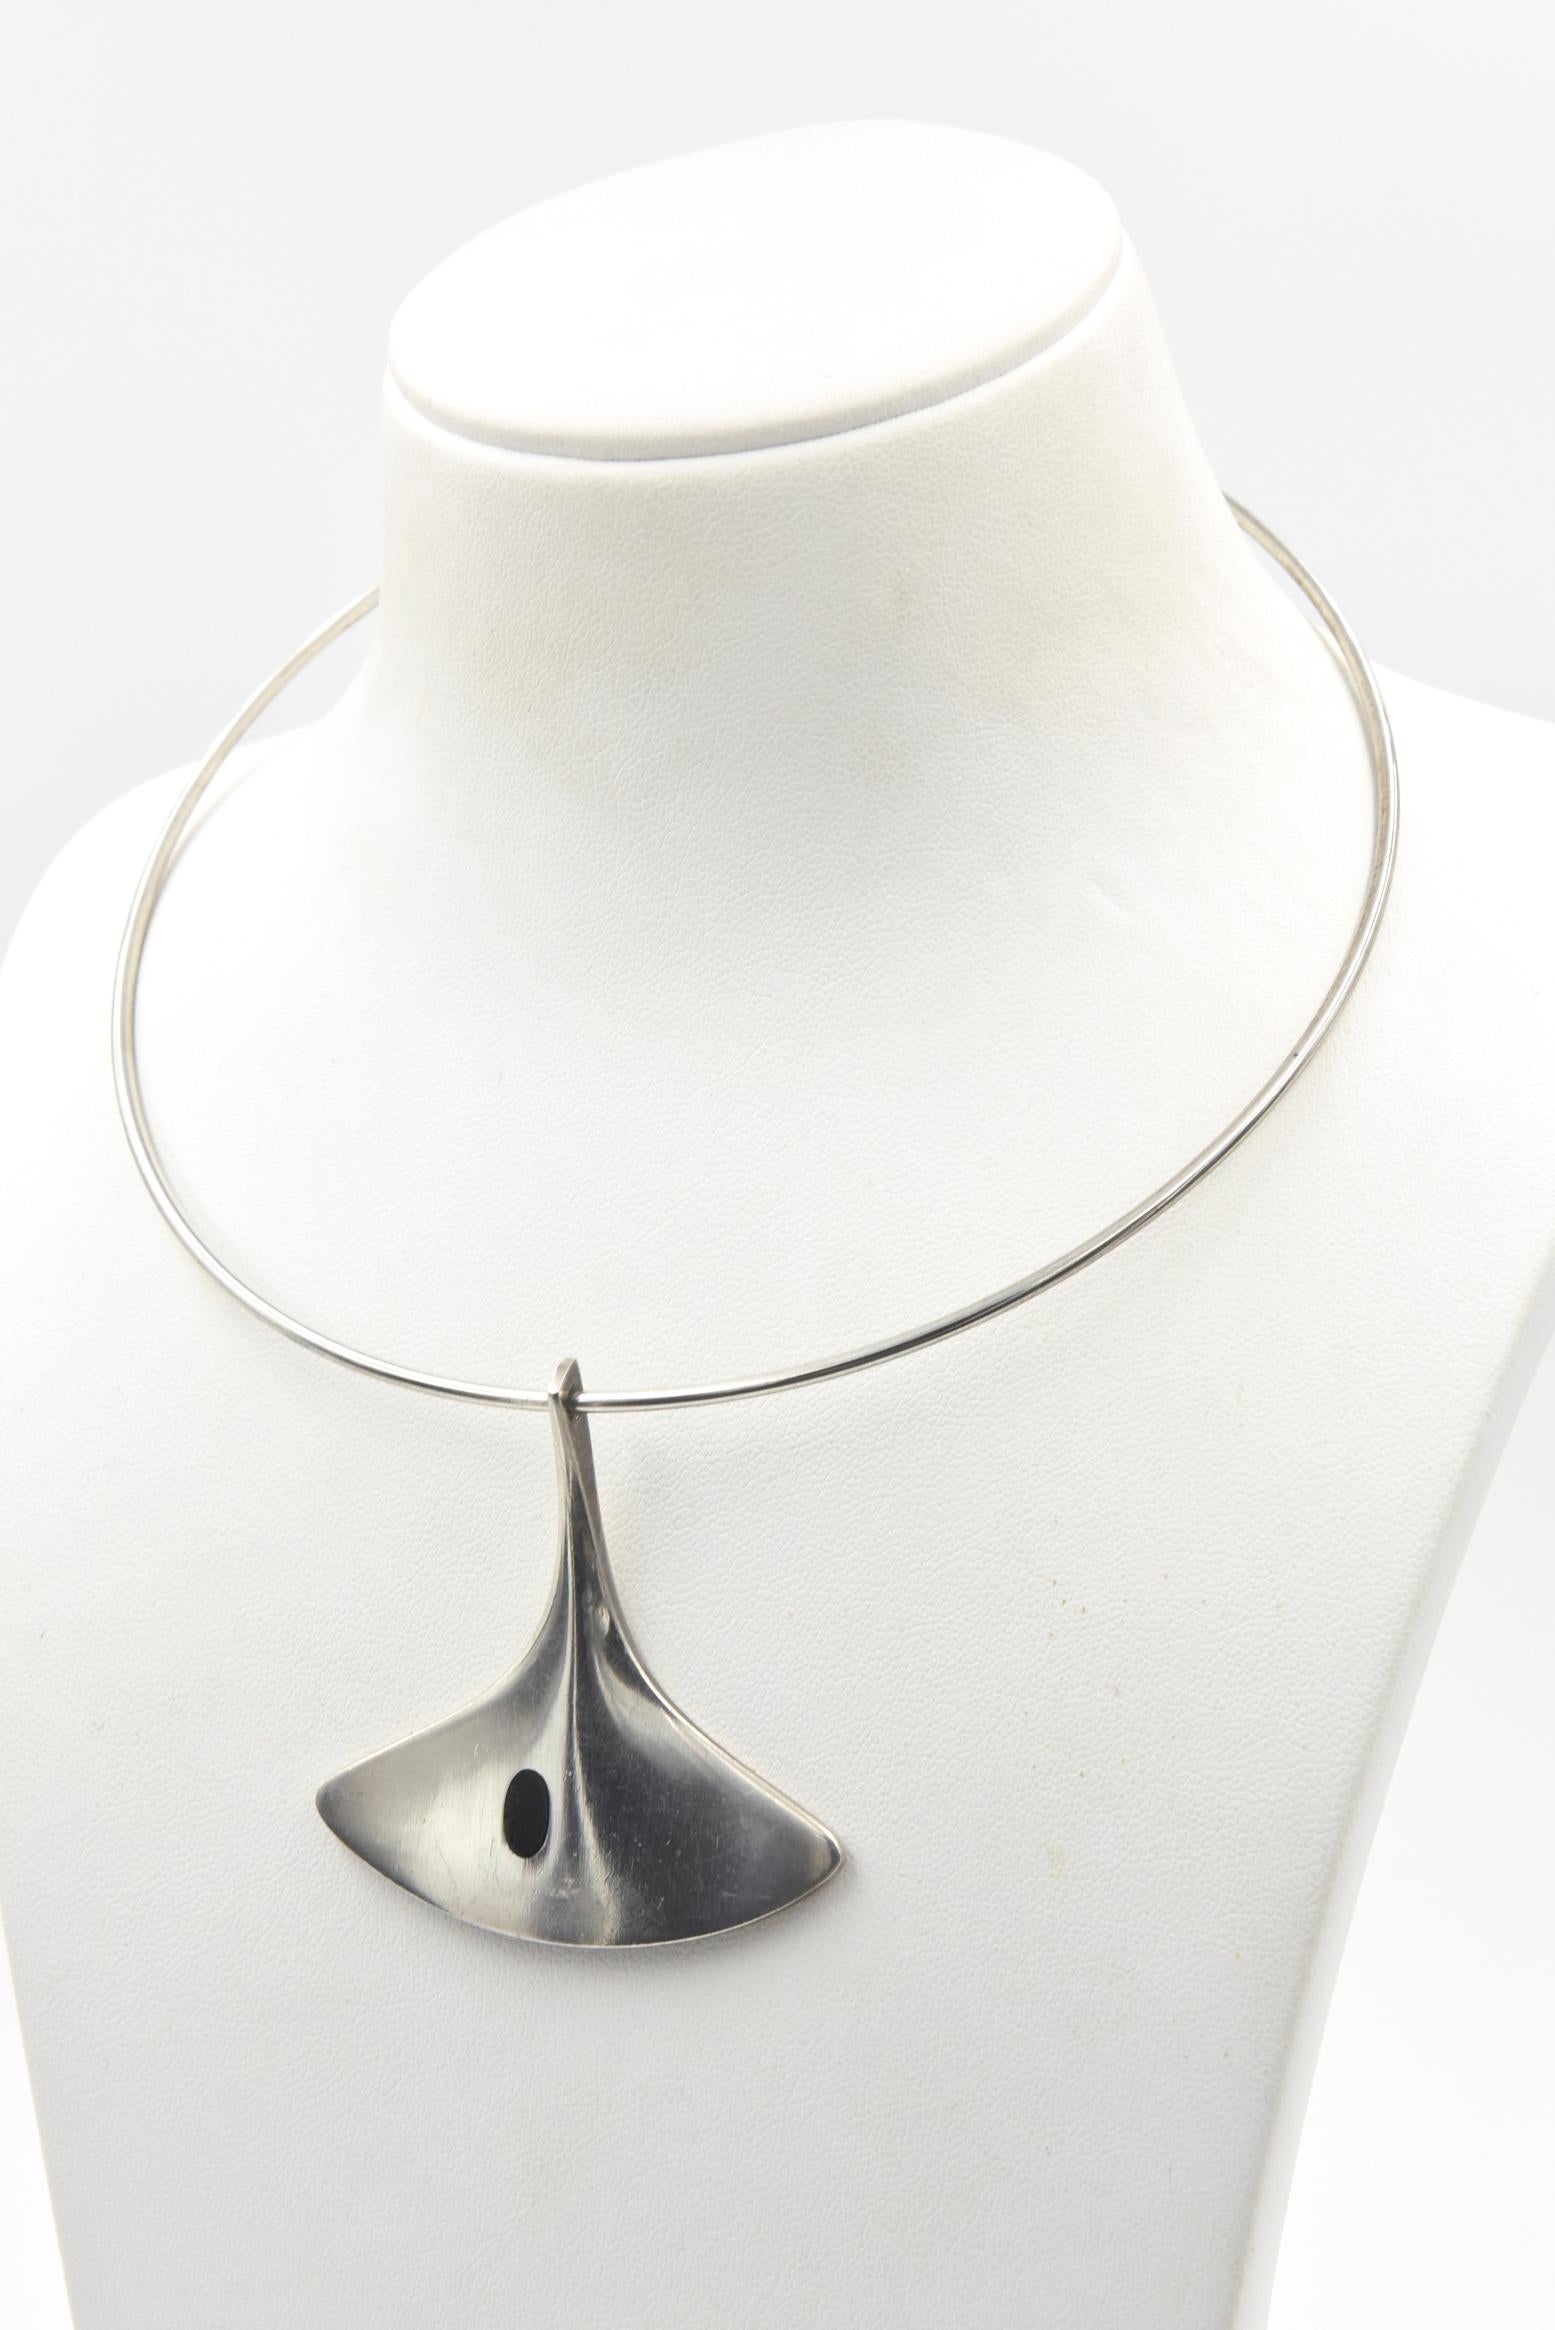 Modernist Hans Hansen Enamel and Sterling Silver Pendant Necklace by Karl Gustav For Sale 3